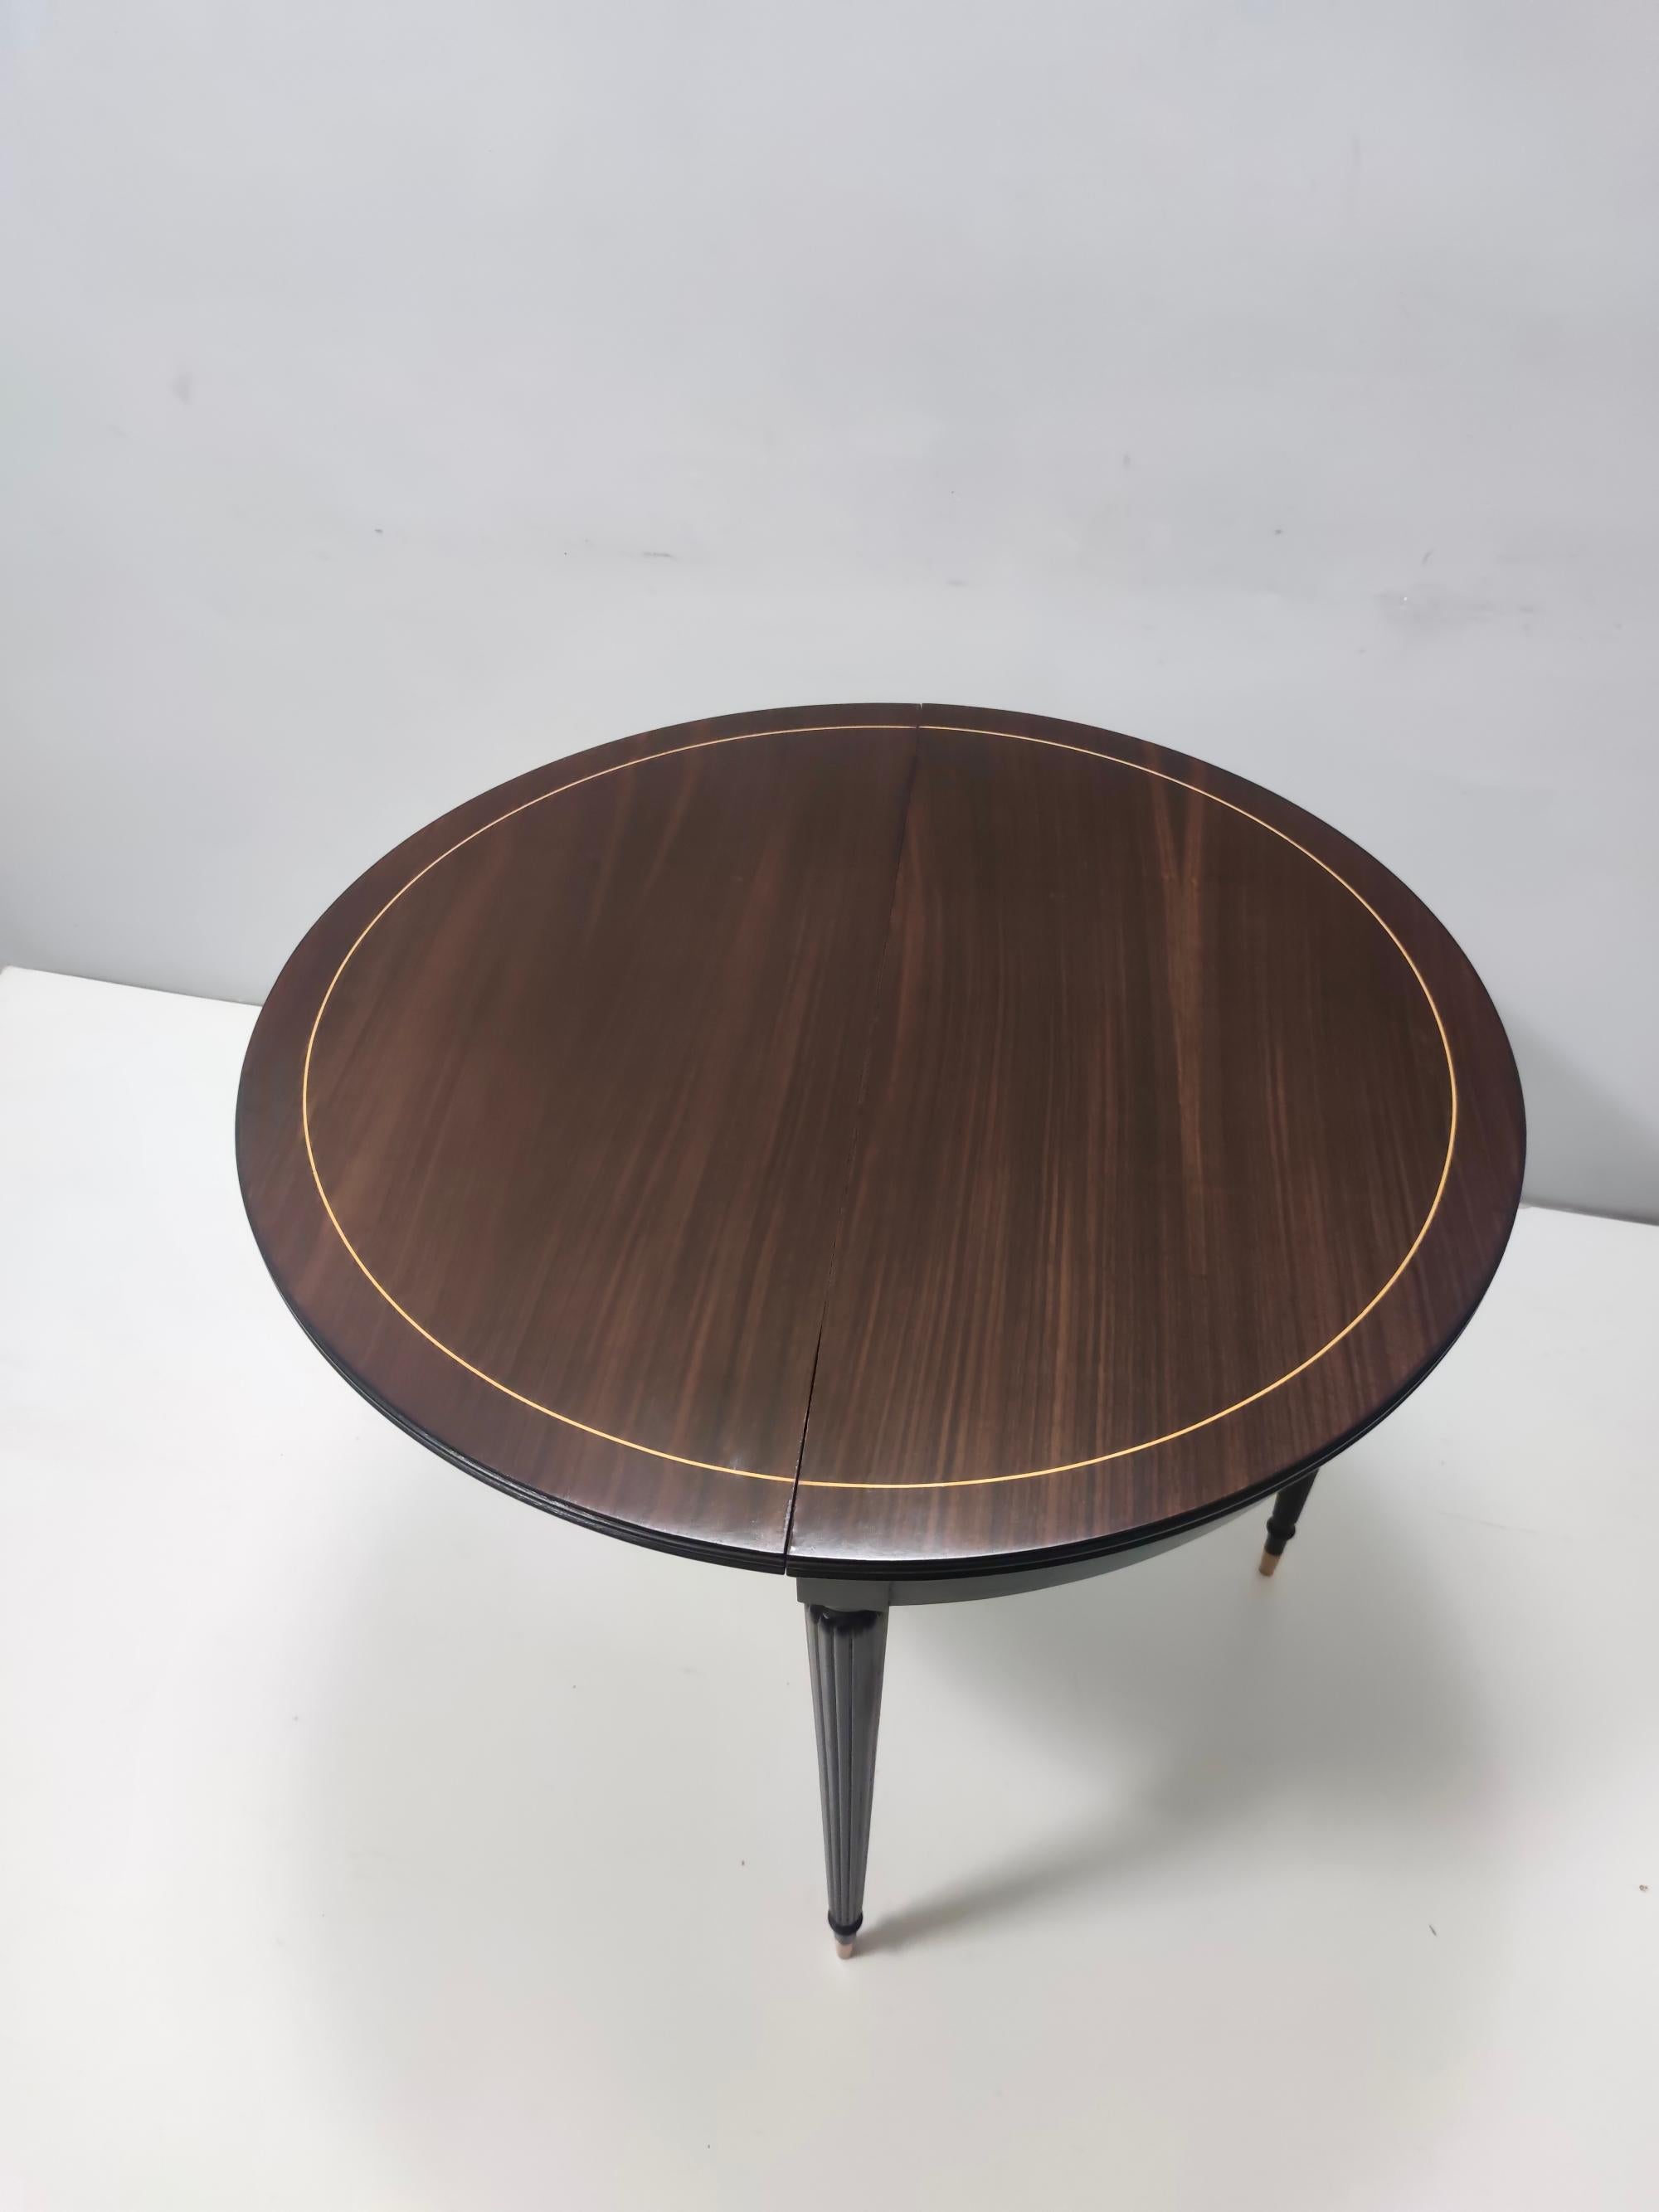 Vintage Black Walnut and Ebonized Beech Folding Table ascr. to Paolo Buffa For Sale 5